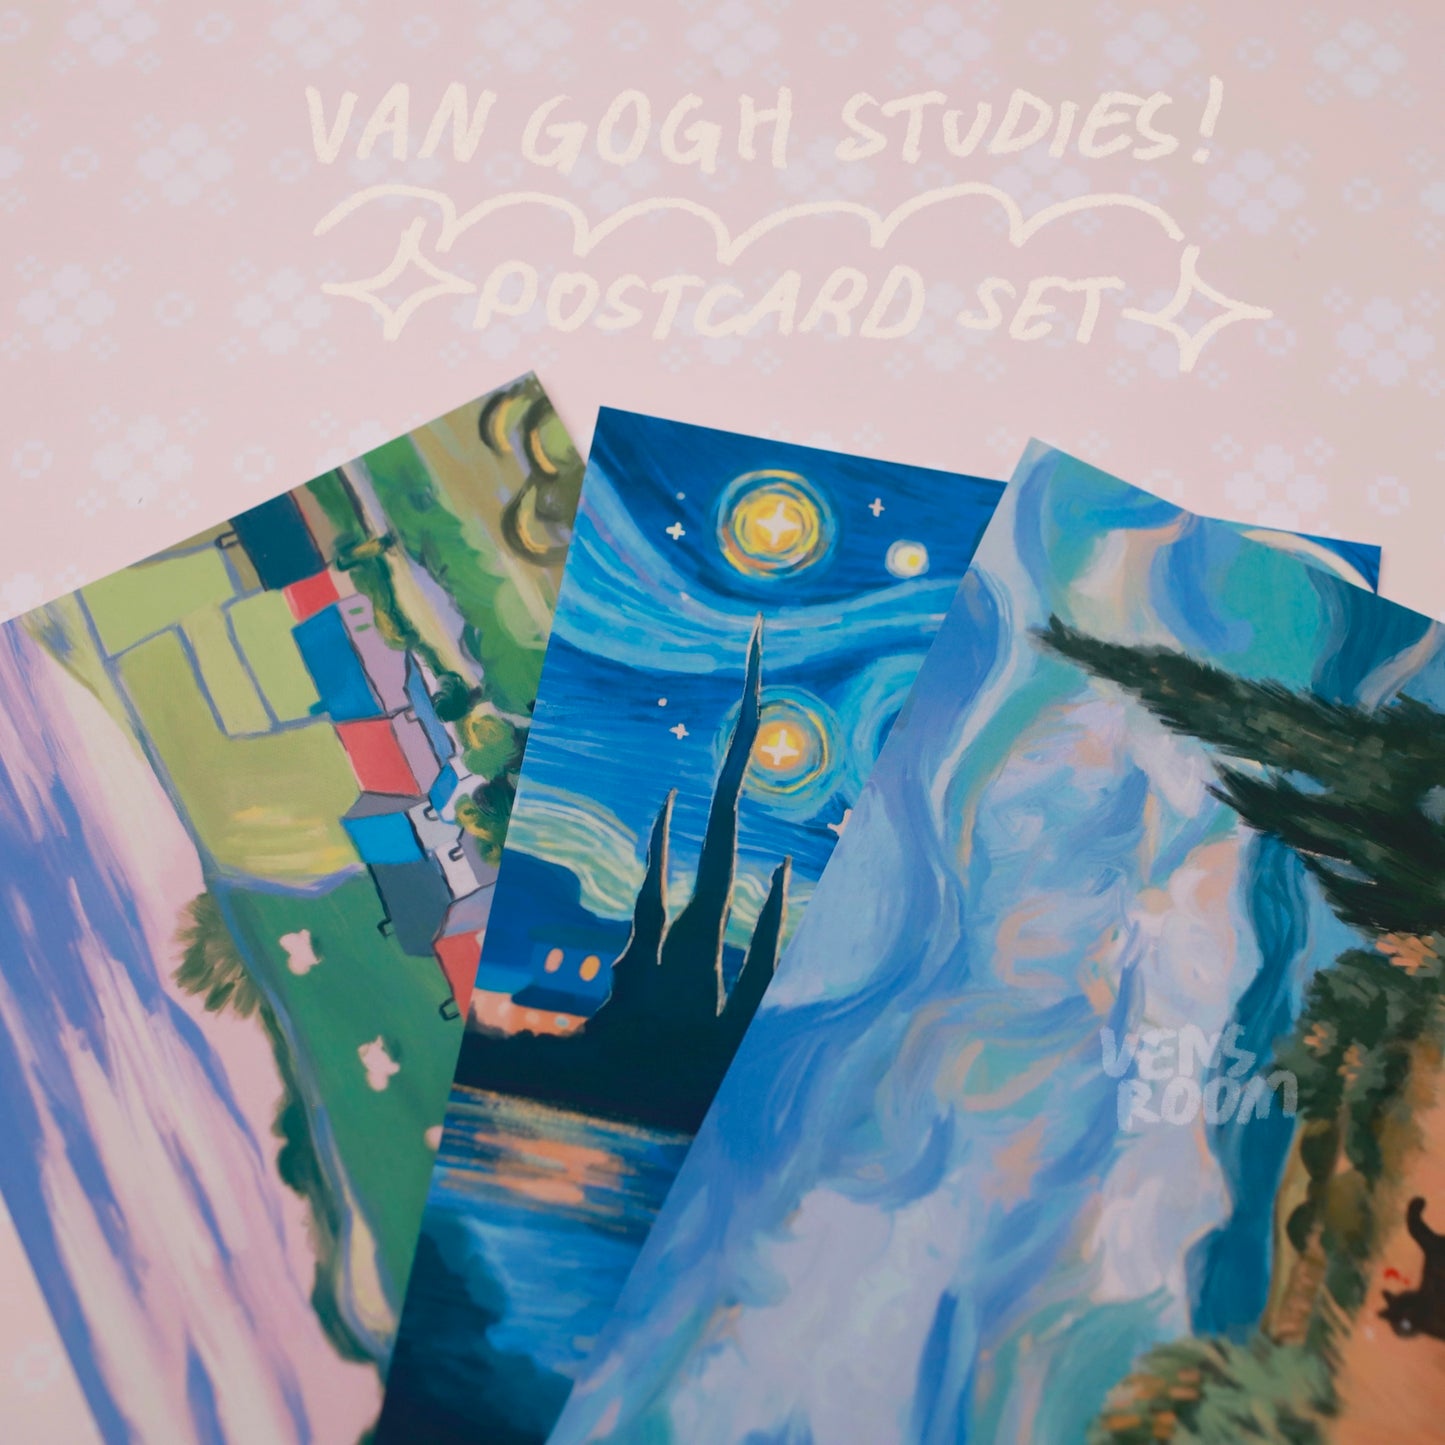 van gogh studies postcard set